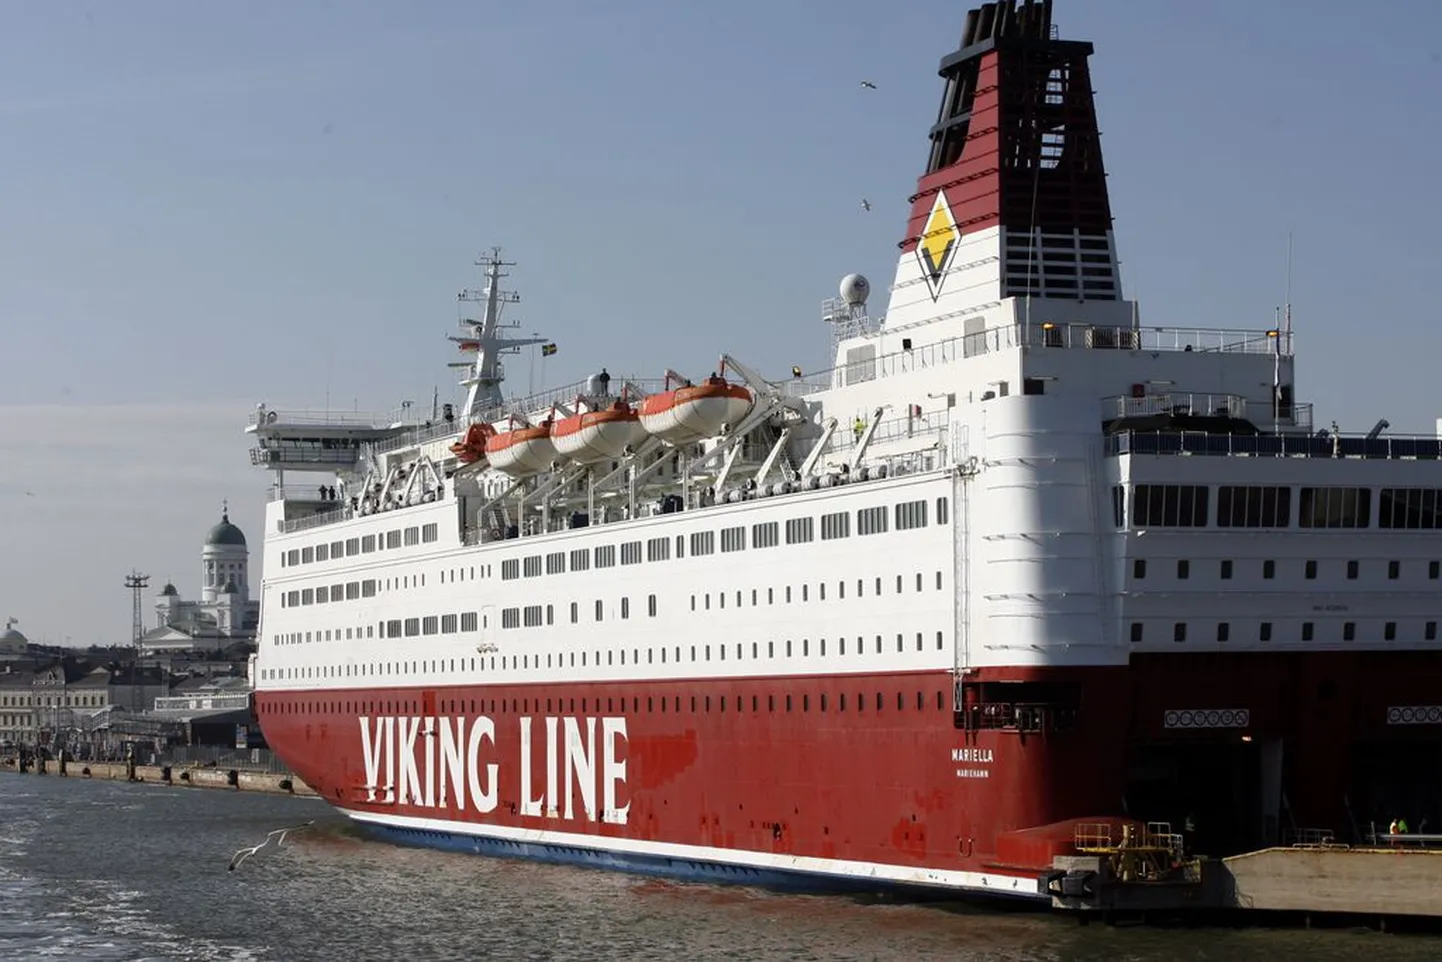 Viking Line'i reisilaev Mariella Helsingi sadamas